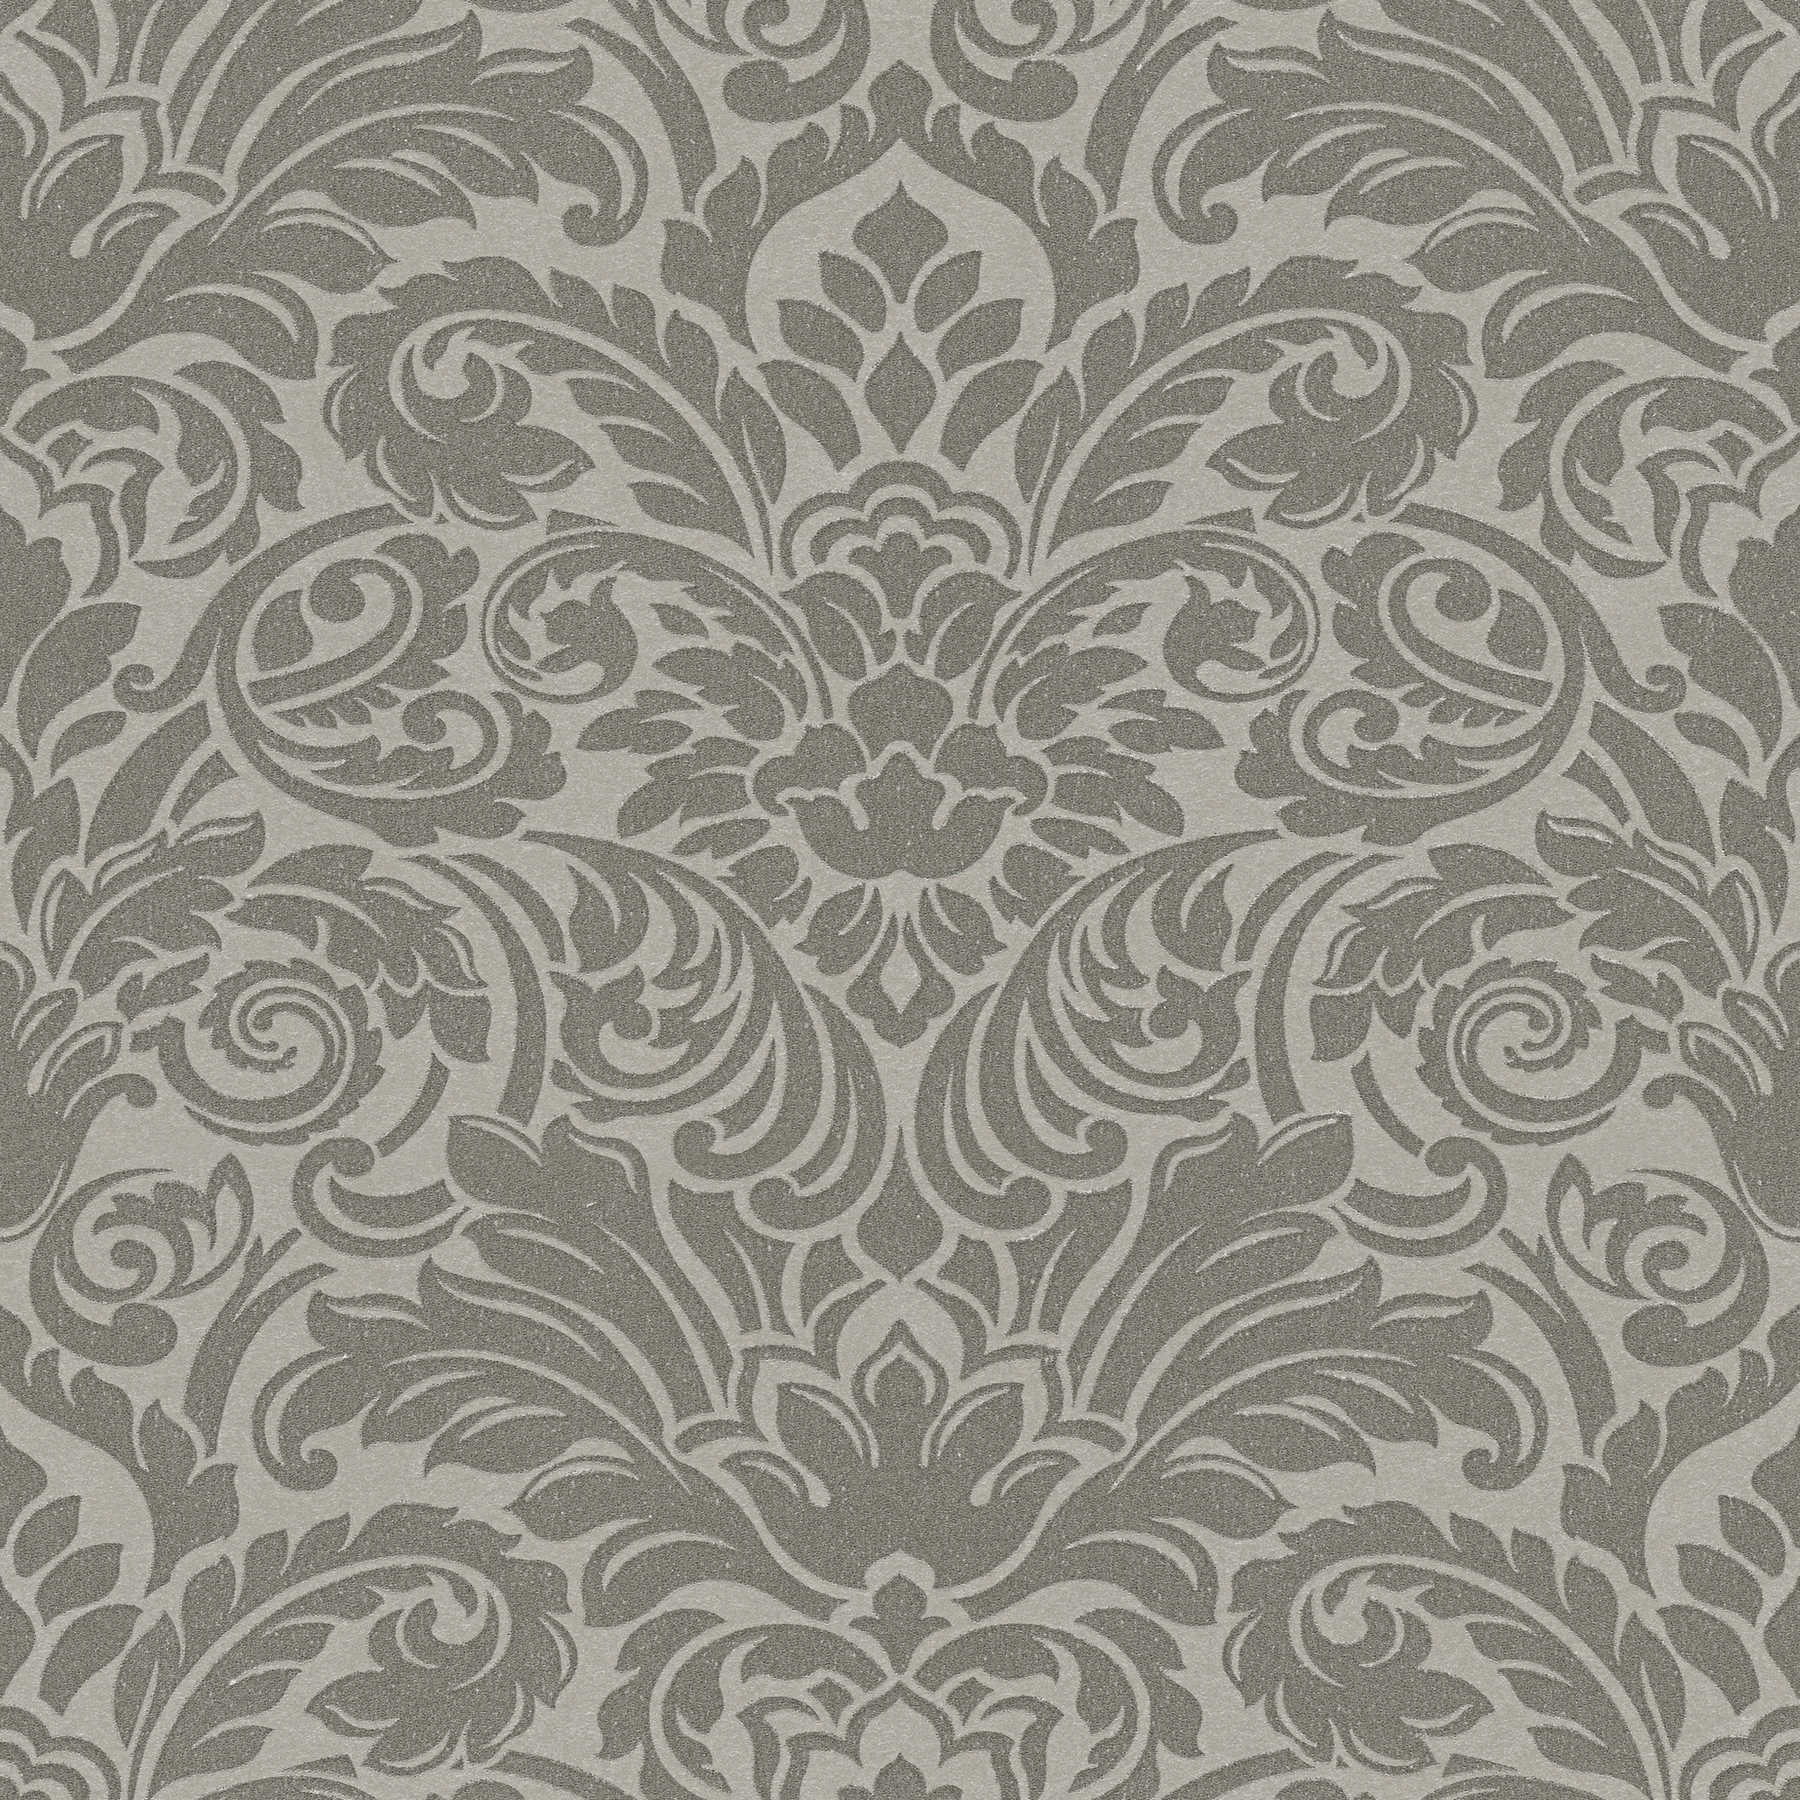         Ornament wallpaper metallic effect & floral design - silver, grey
    